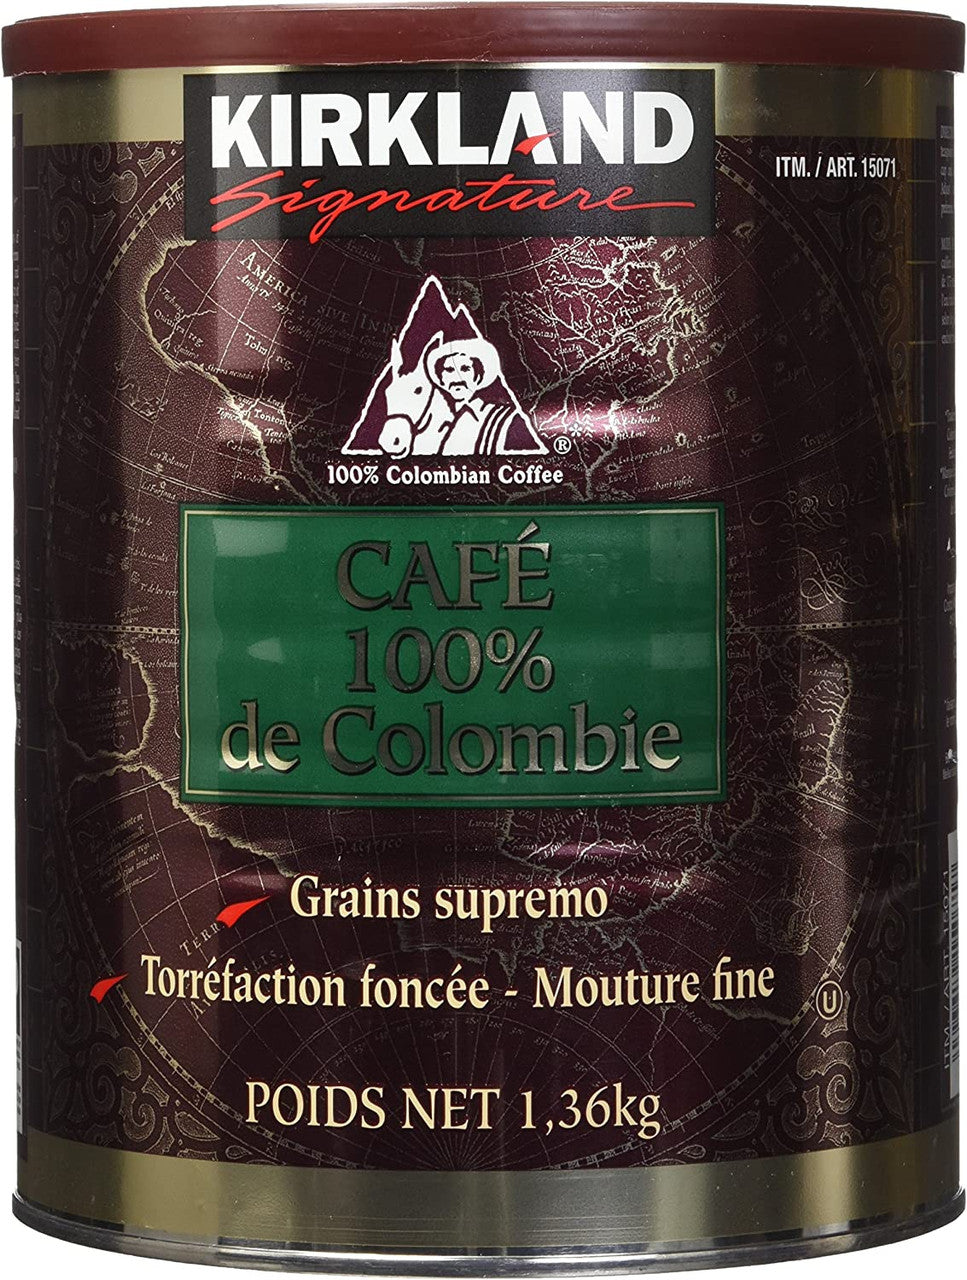 Kirkland 100% Colombian Supremo Dark Roast-Fine Grind Coffee 3lb. Can